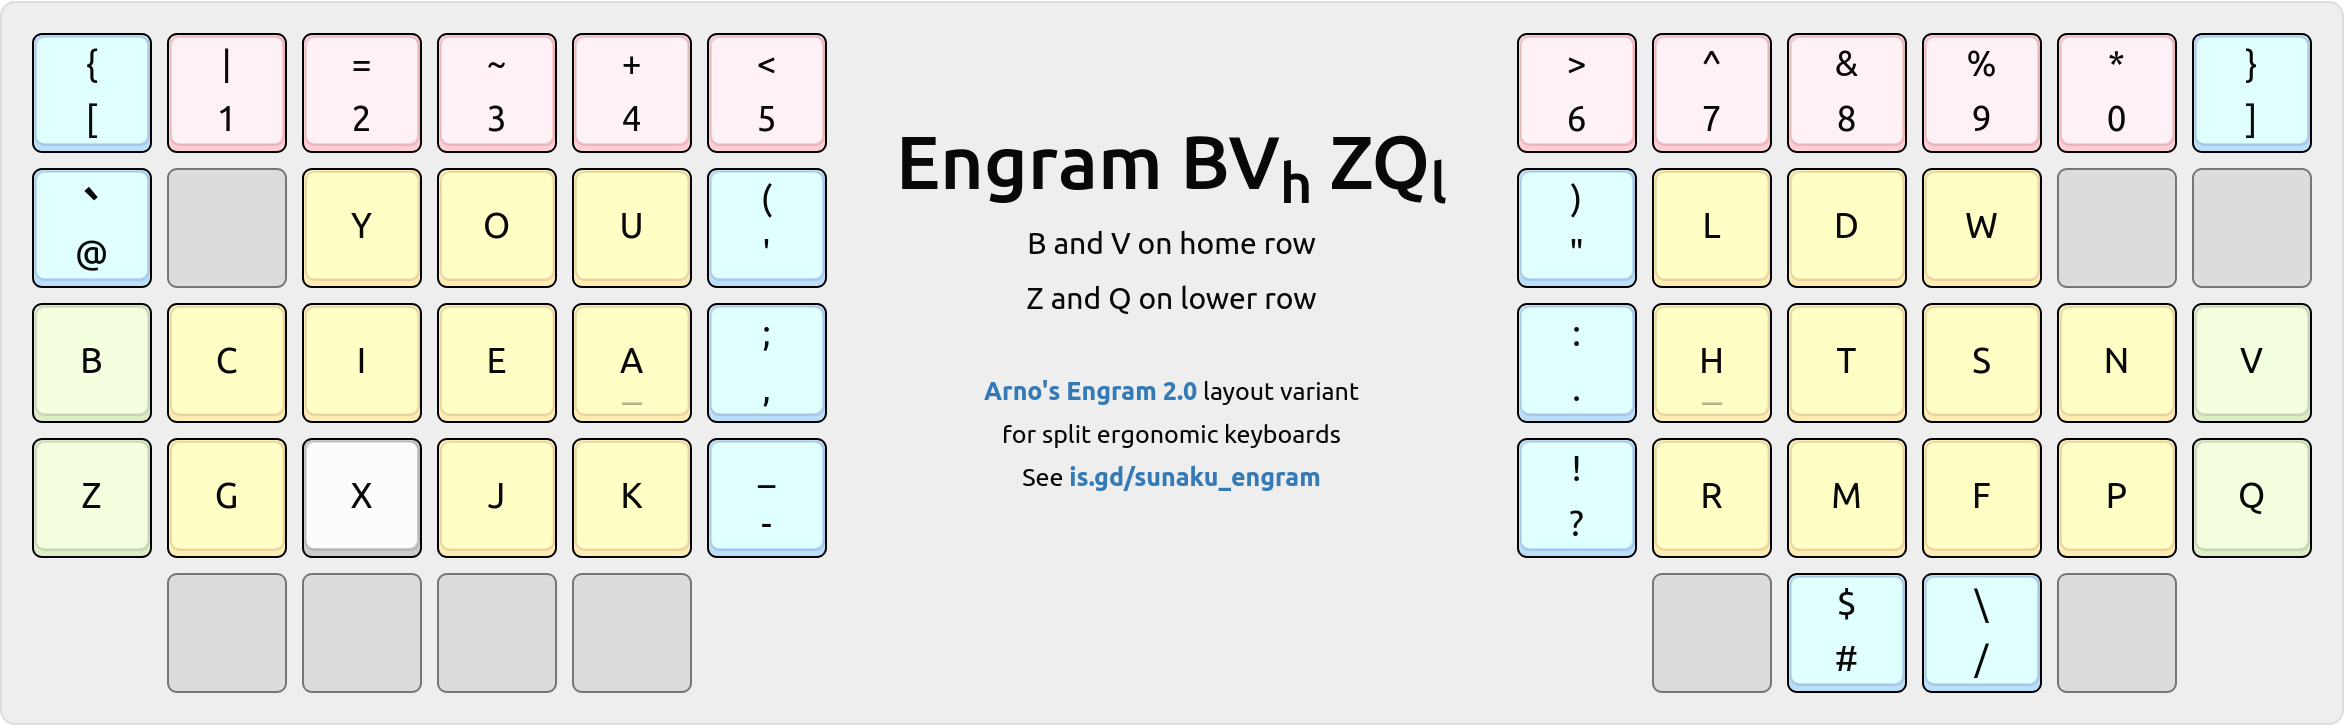 Engram-BVh-ZQl variant